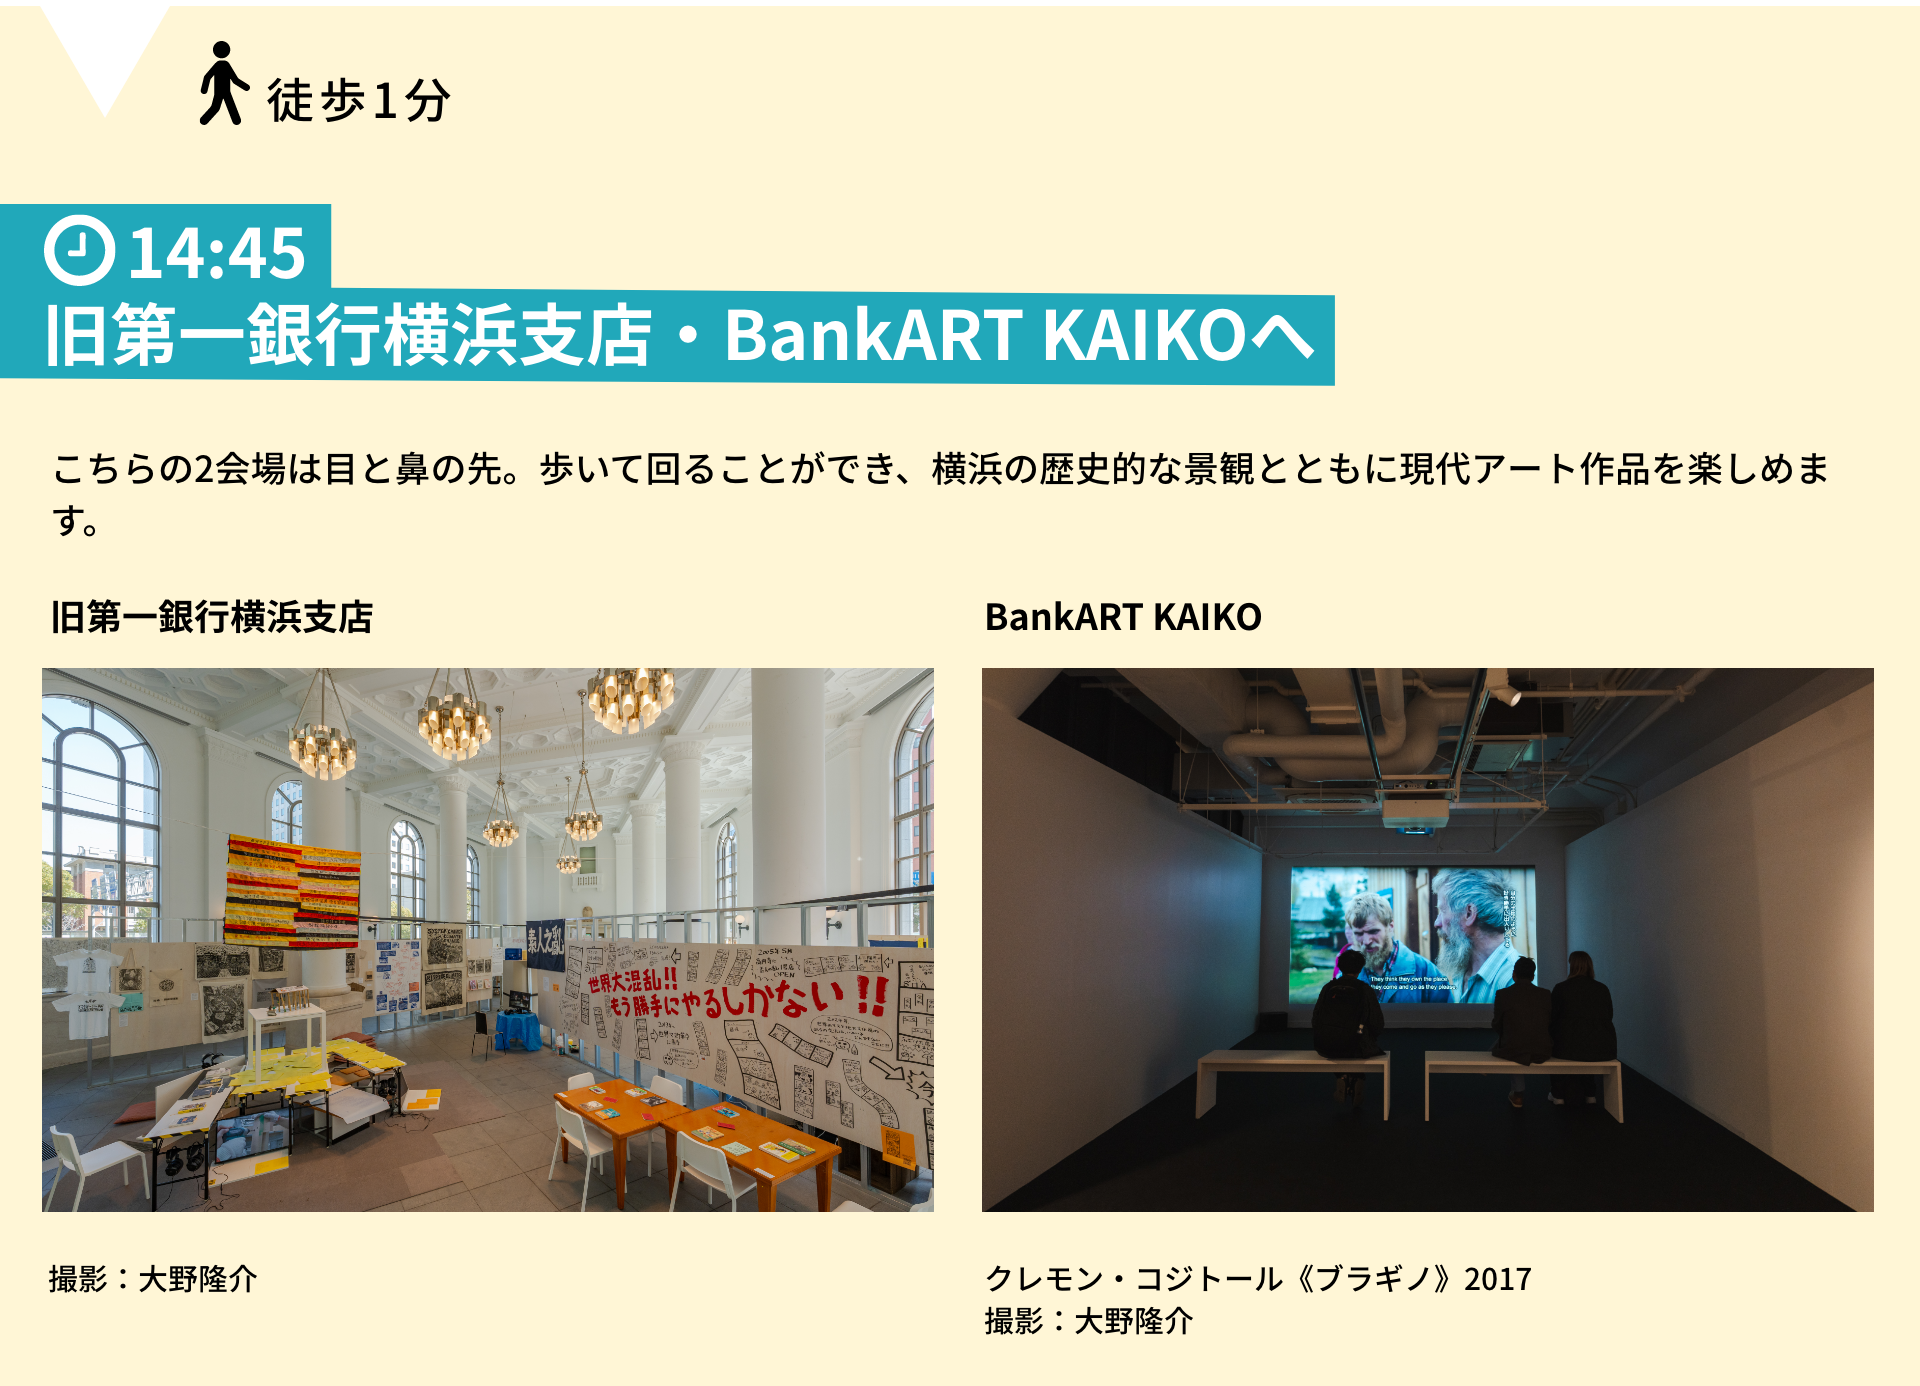 旧第一銀行横浜支店・BankART KAIKOへ